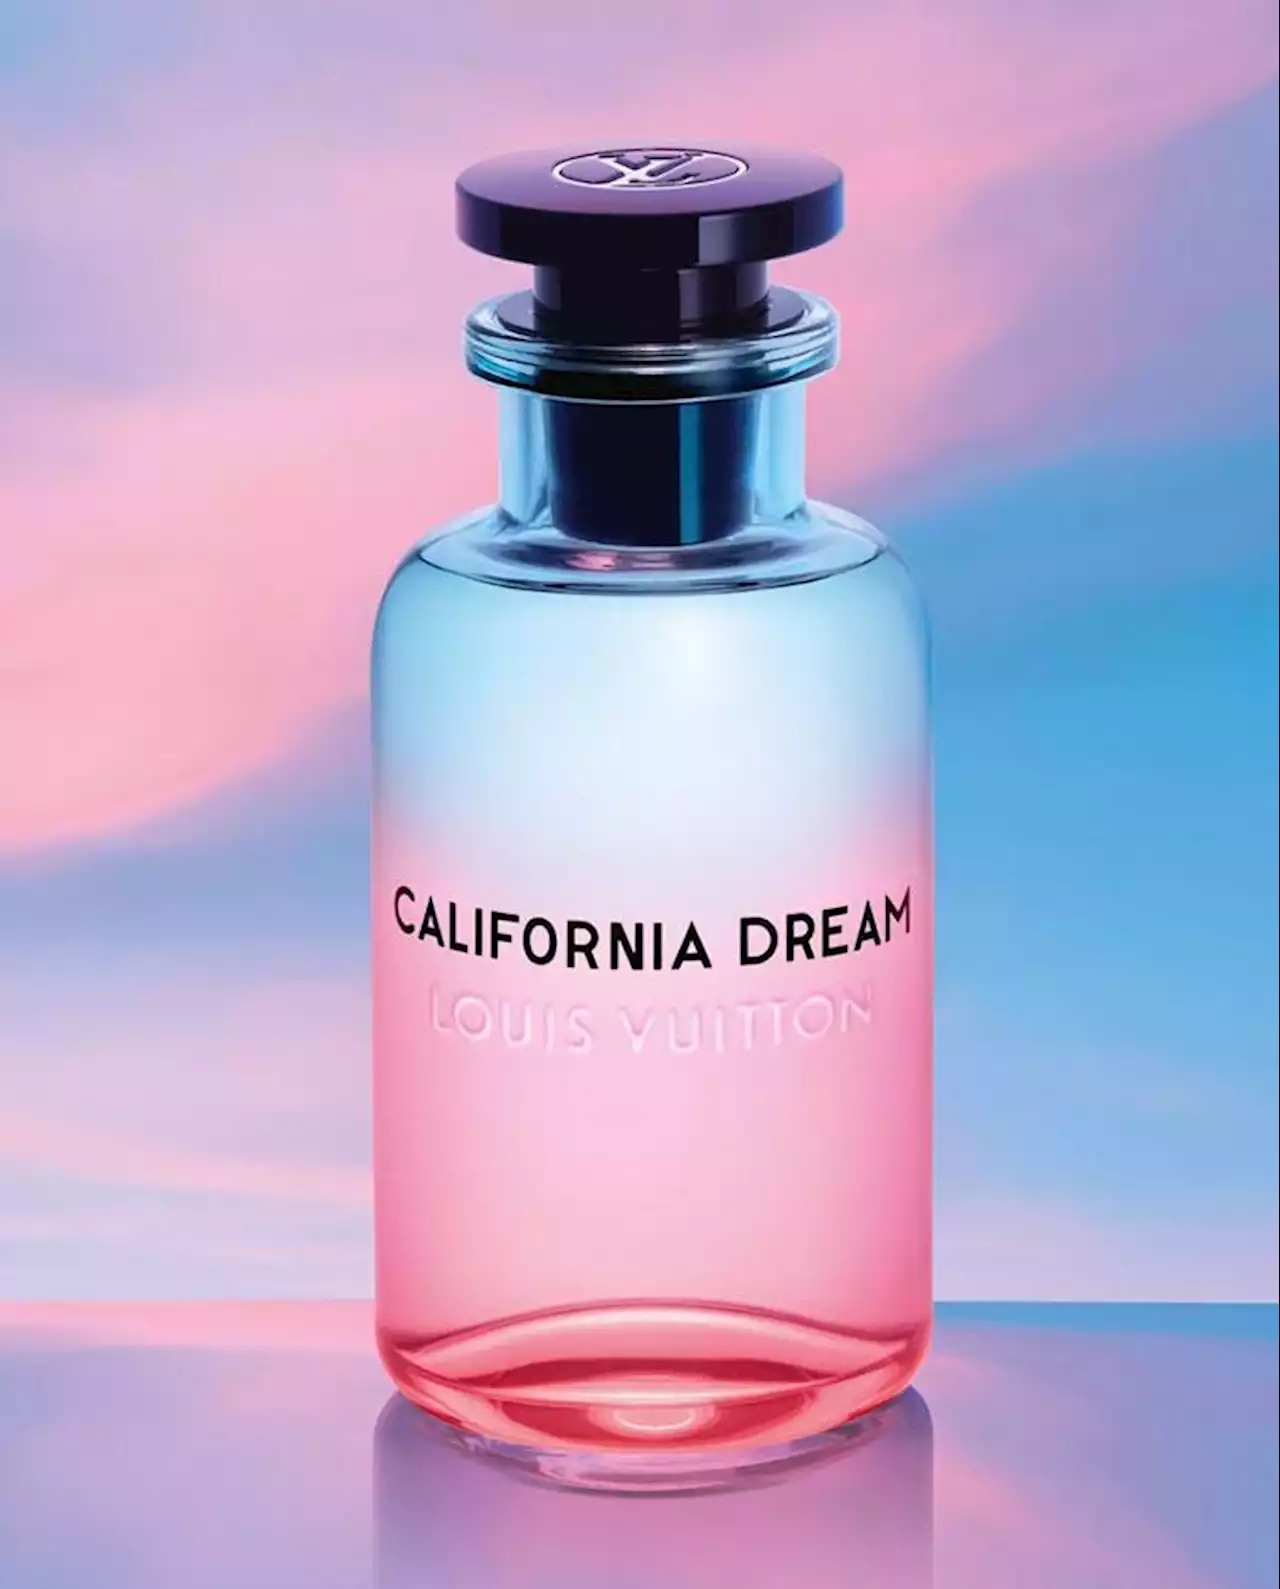 California Dream Louis Vuitton άρωμα - ένα νέο άρωμα για γυναίκες και